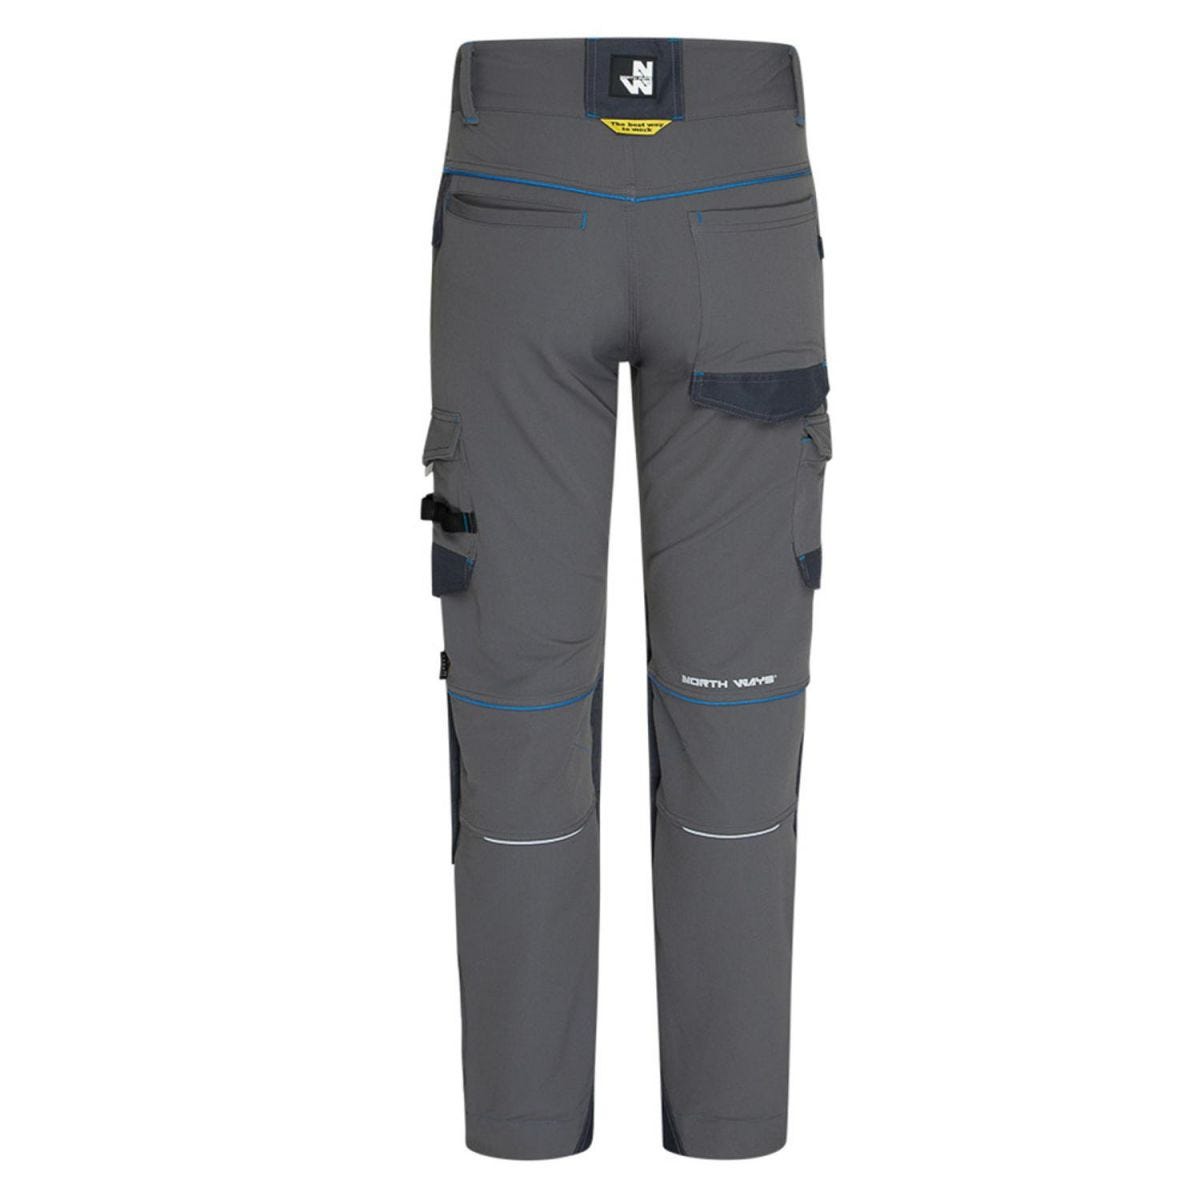 Pantalon de travail SACHA gris/bleu - North Ways - Taille 42 2